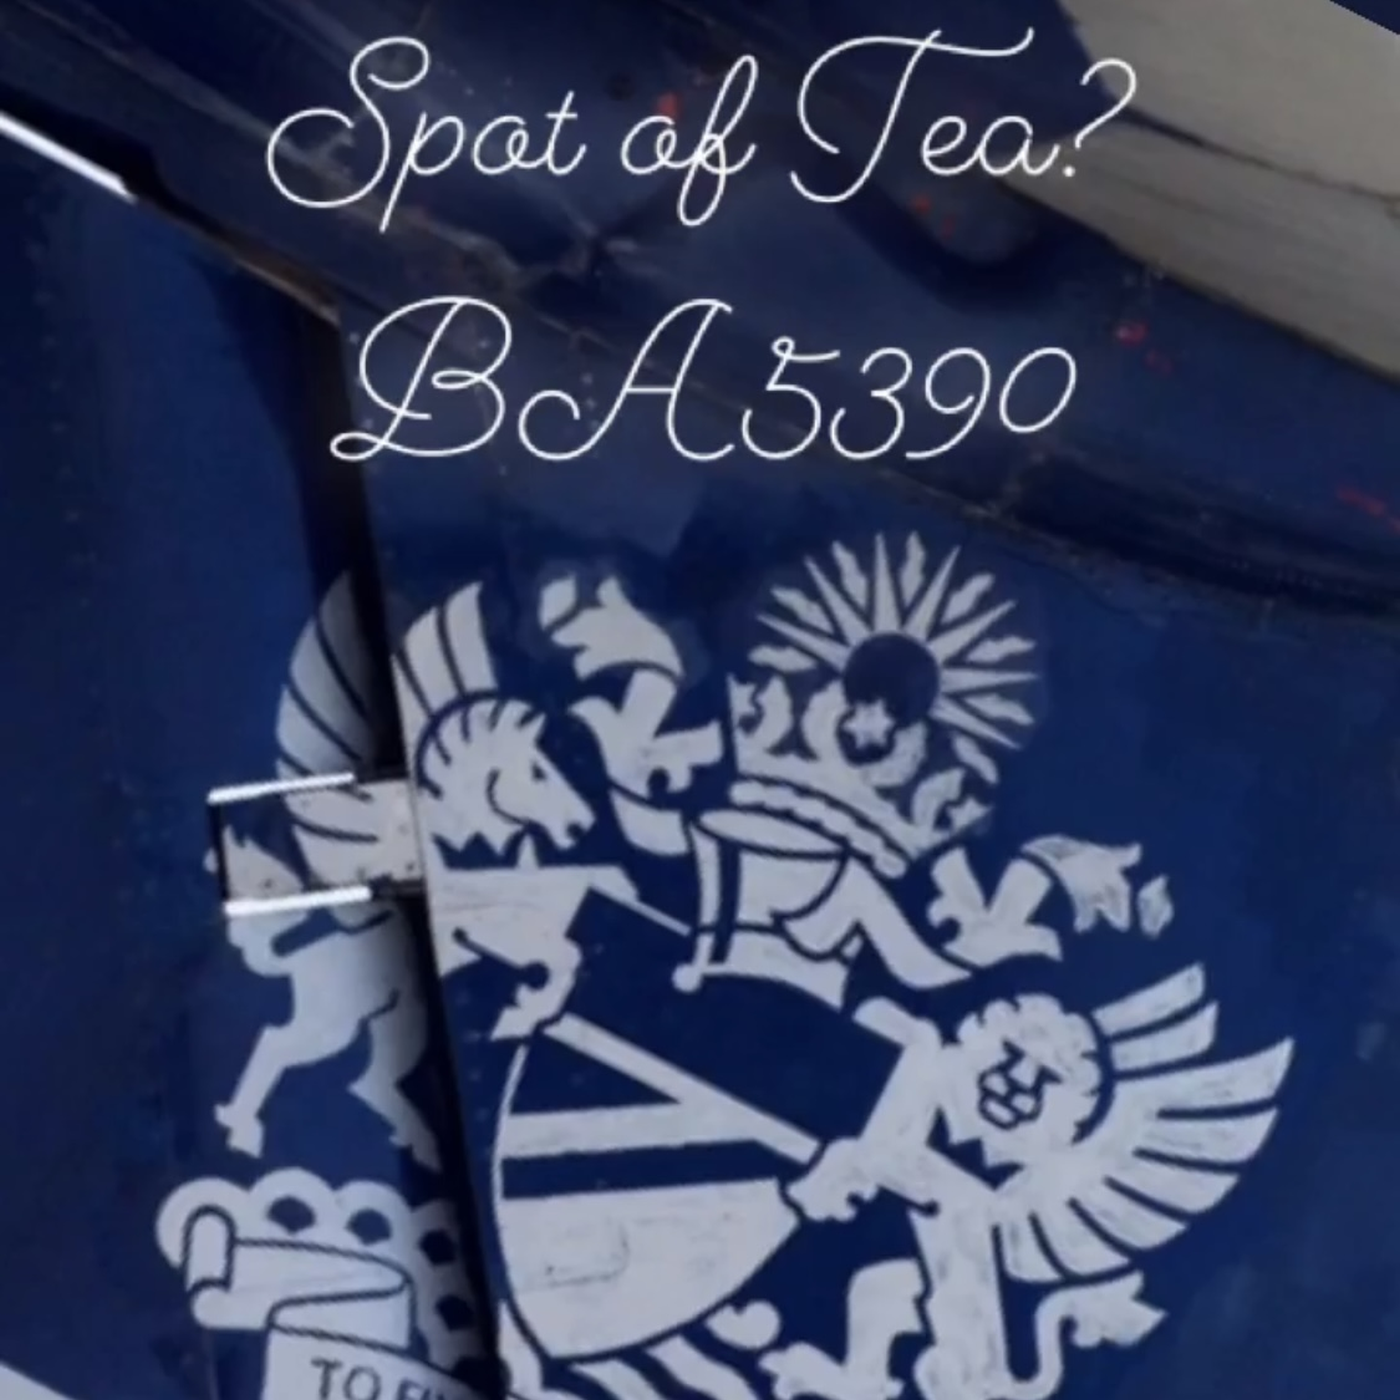 23. Spot of Tea - British Airways 5390 hero artwork